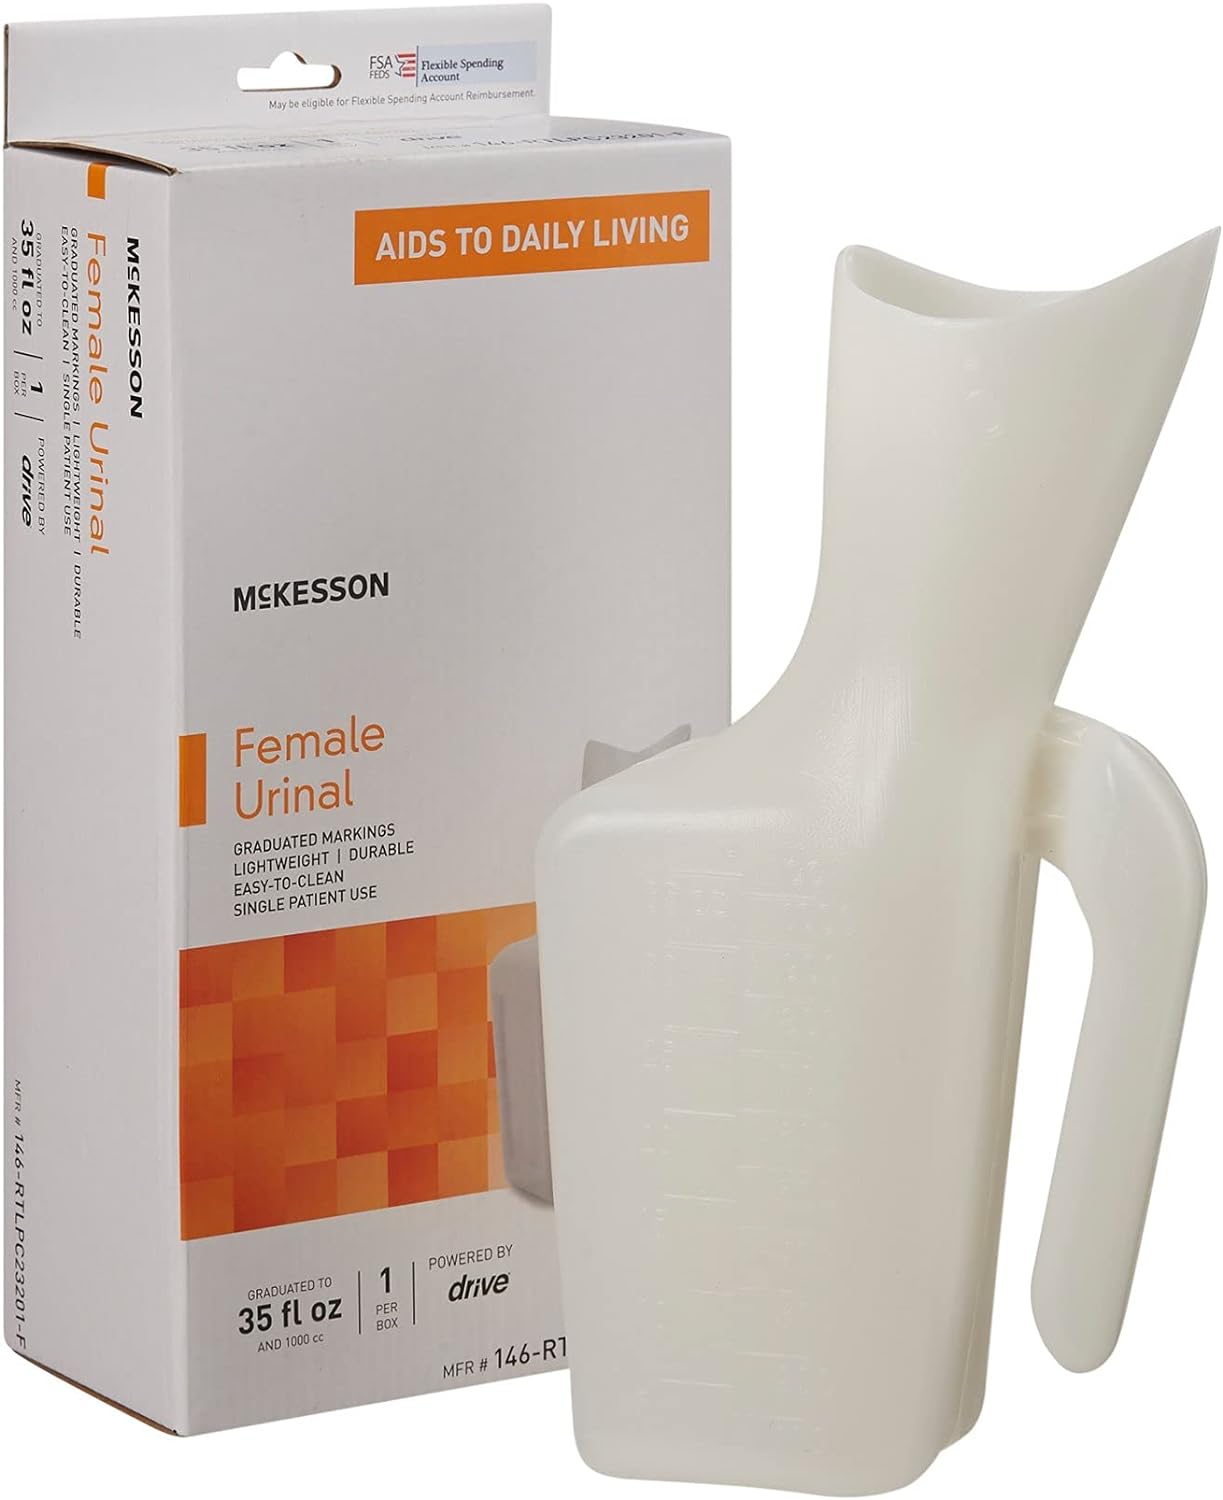 McKesson Female Urinal Graduated Markings, Lightweight, Single Patient Use, 946 mL, 1 Count